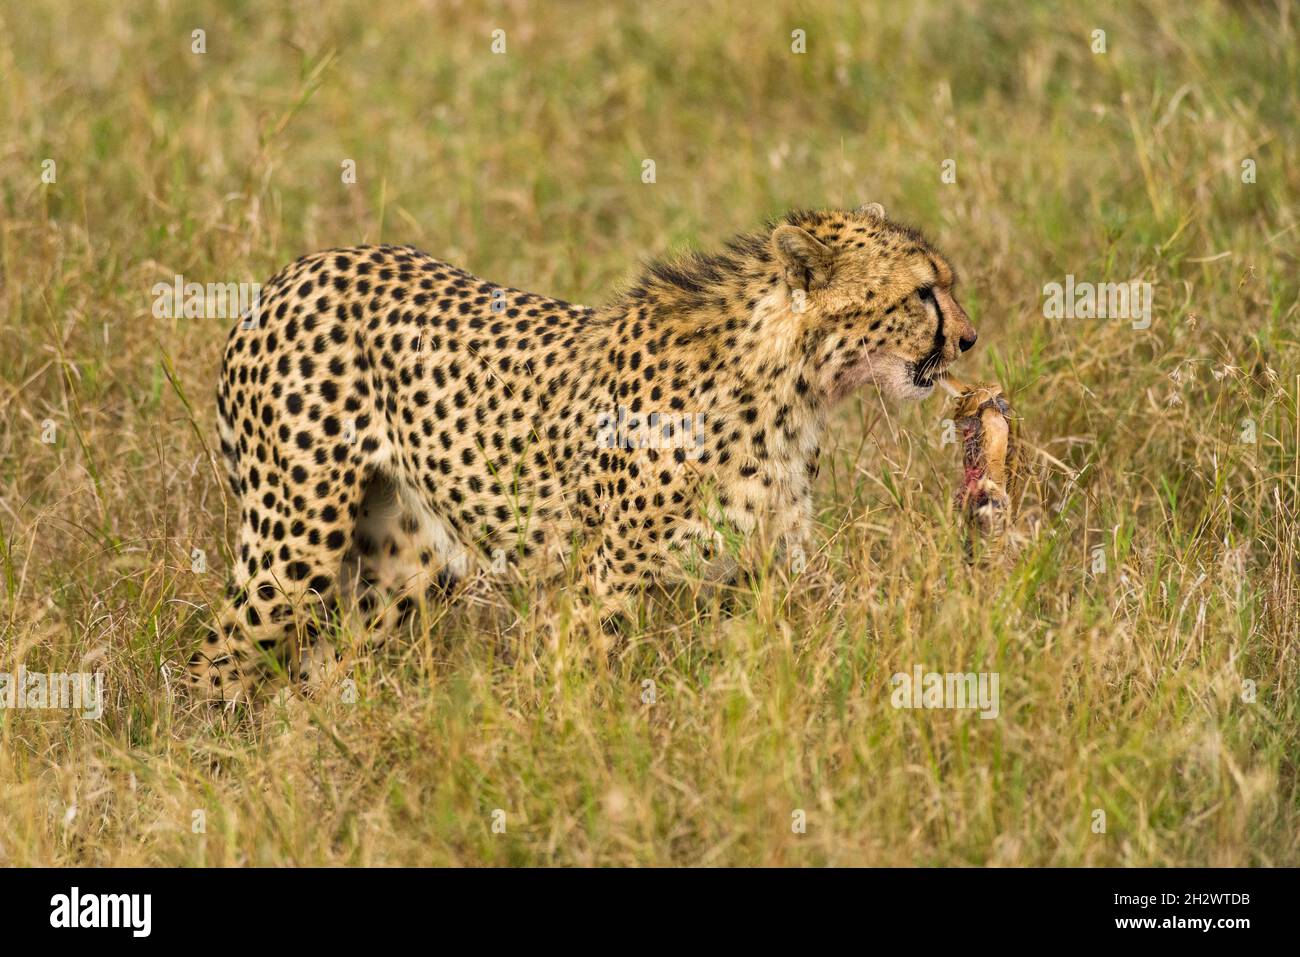 Cheetah (Acinonyx jubatus) with carcass in mouth, Masai Mara, Kenya Stock Photo